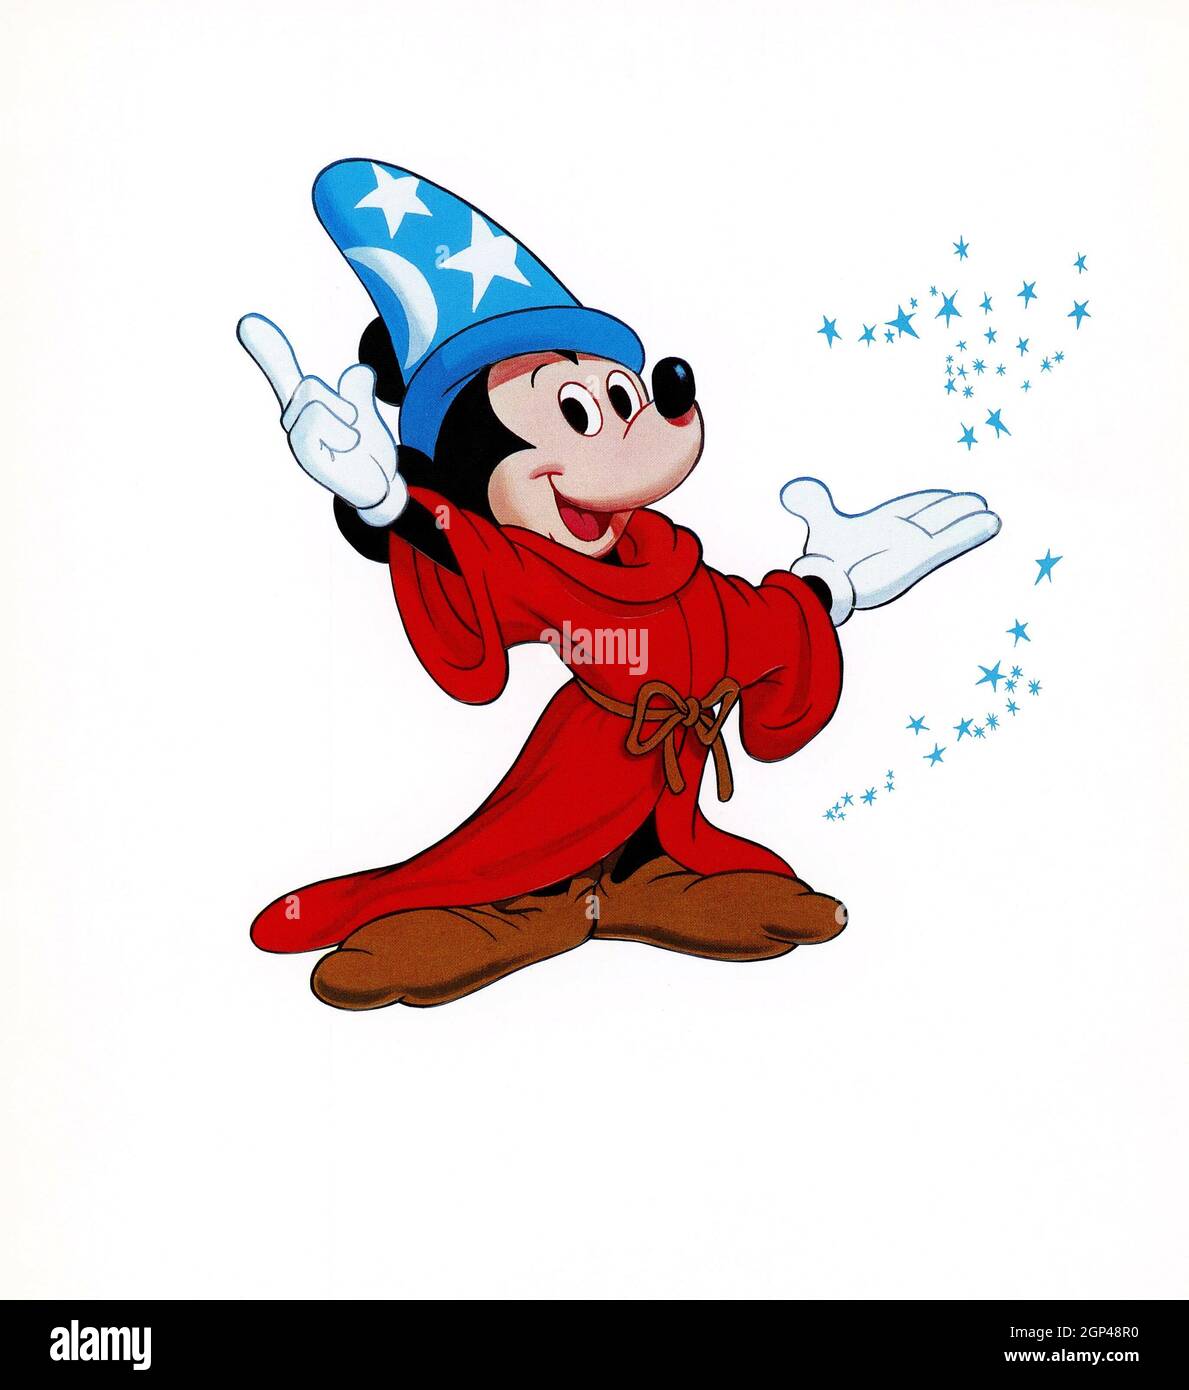 FANTASIA, Mickey Mouse, „der Zauberlehrling“, 1940. ©Walt Disney/Courtesy  Everett Collection Stockfotografie - Alamy